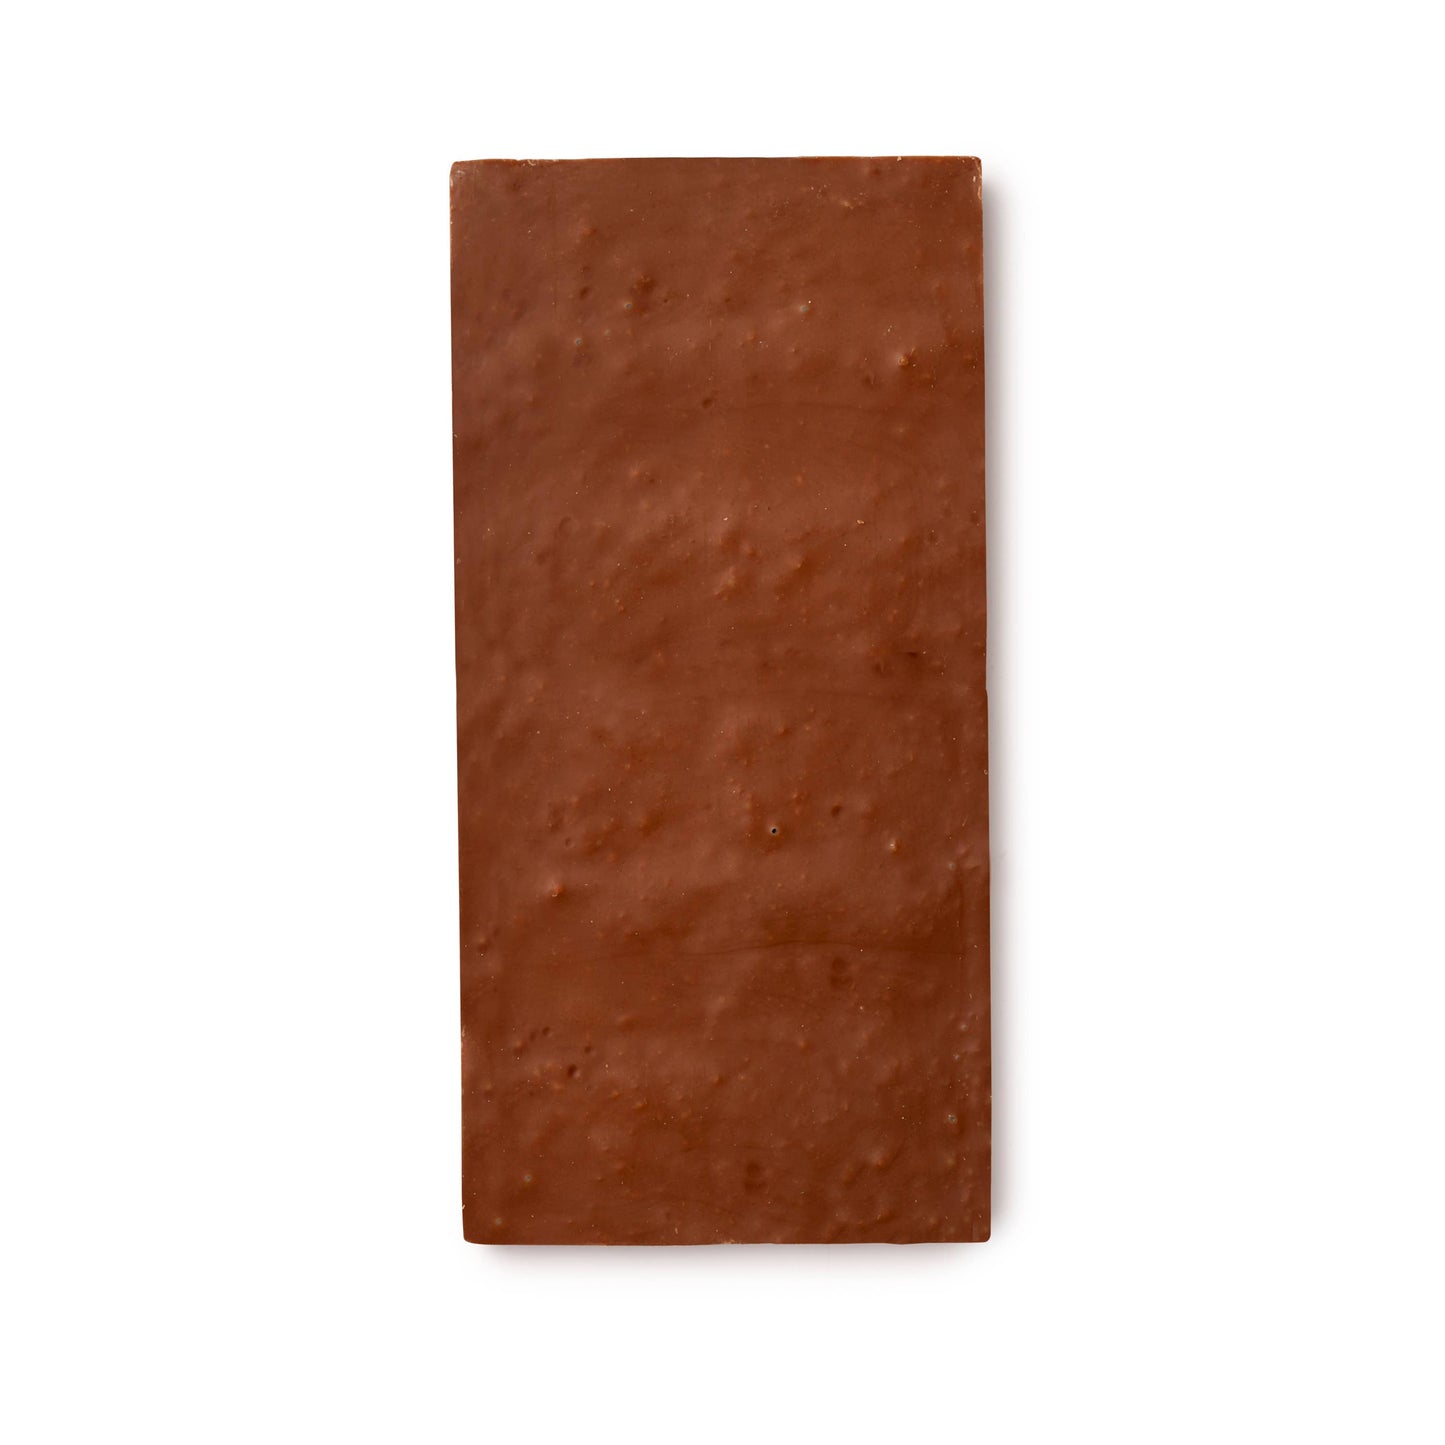 Honeycomb Crunch Chocolate Bar